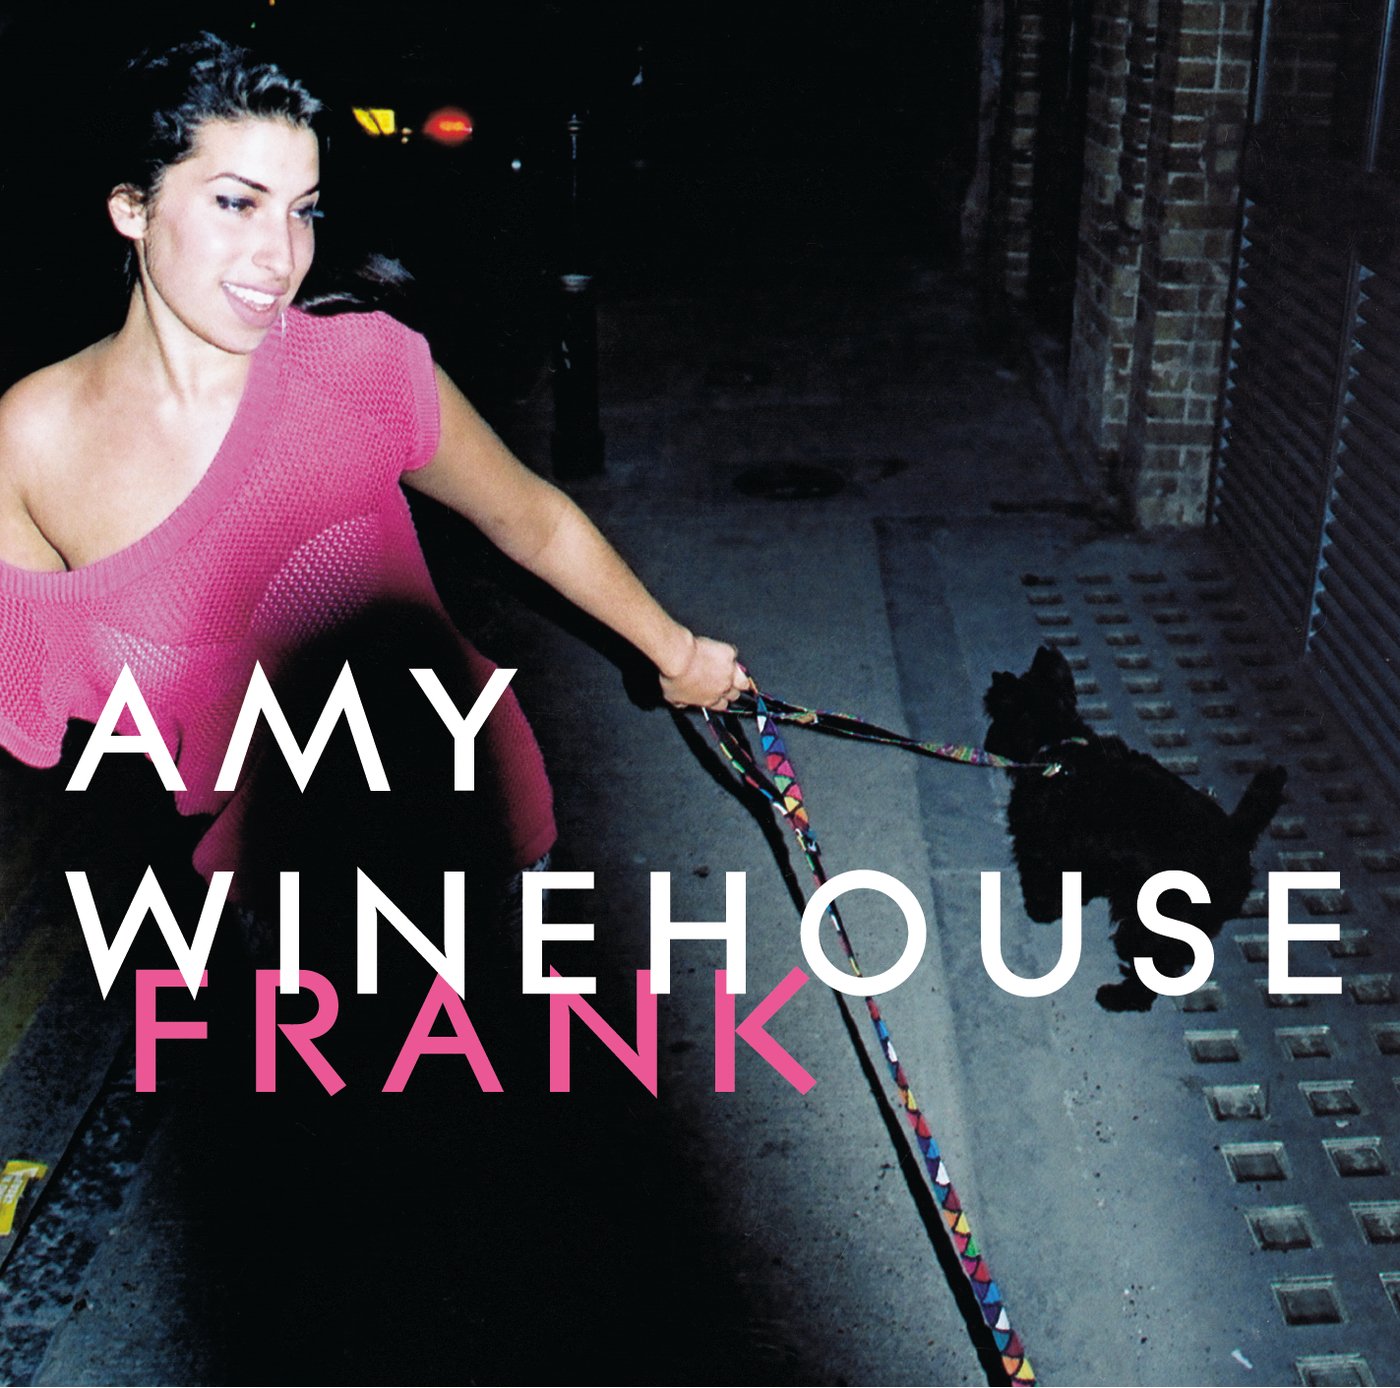 Amy Winehouse "Frank" Remastered, Gatefold, 180g LP